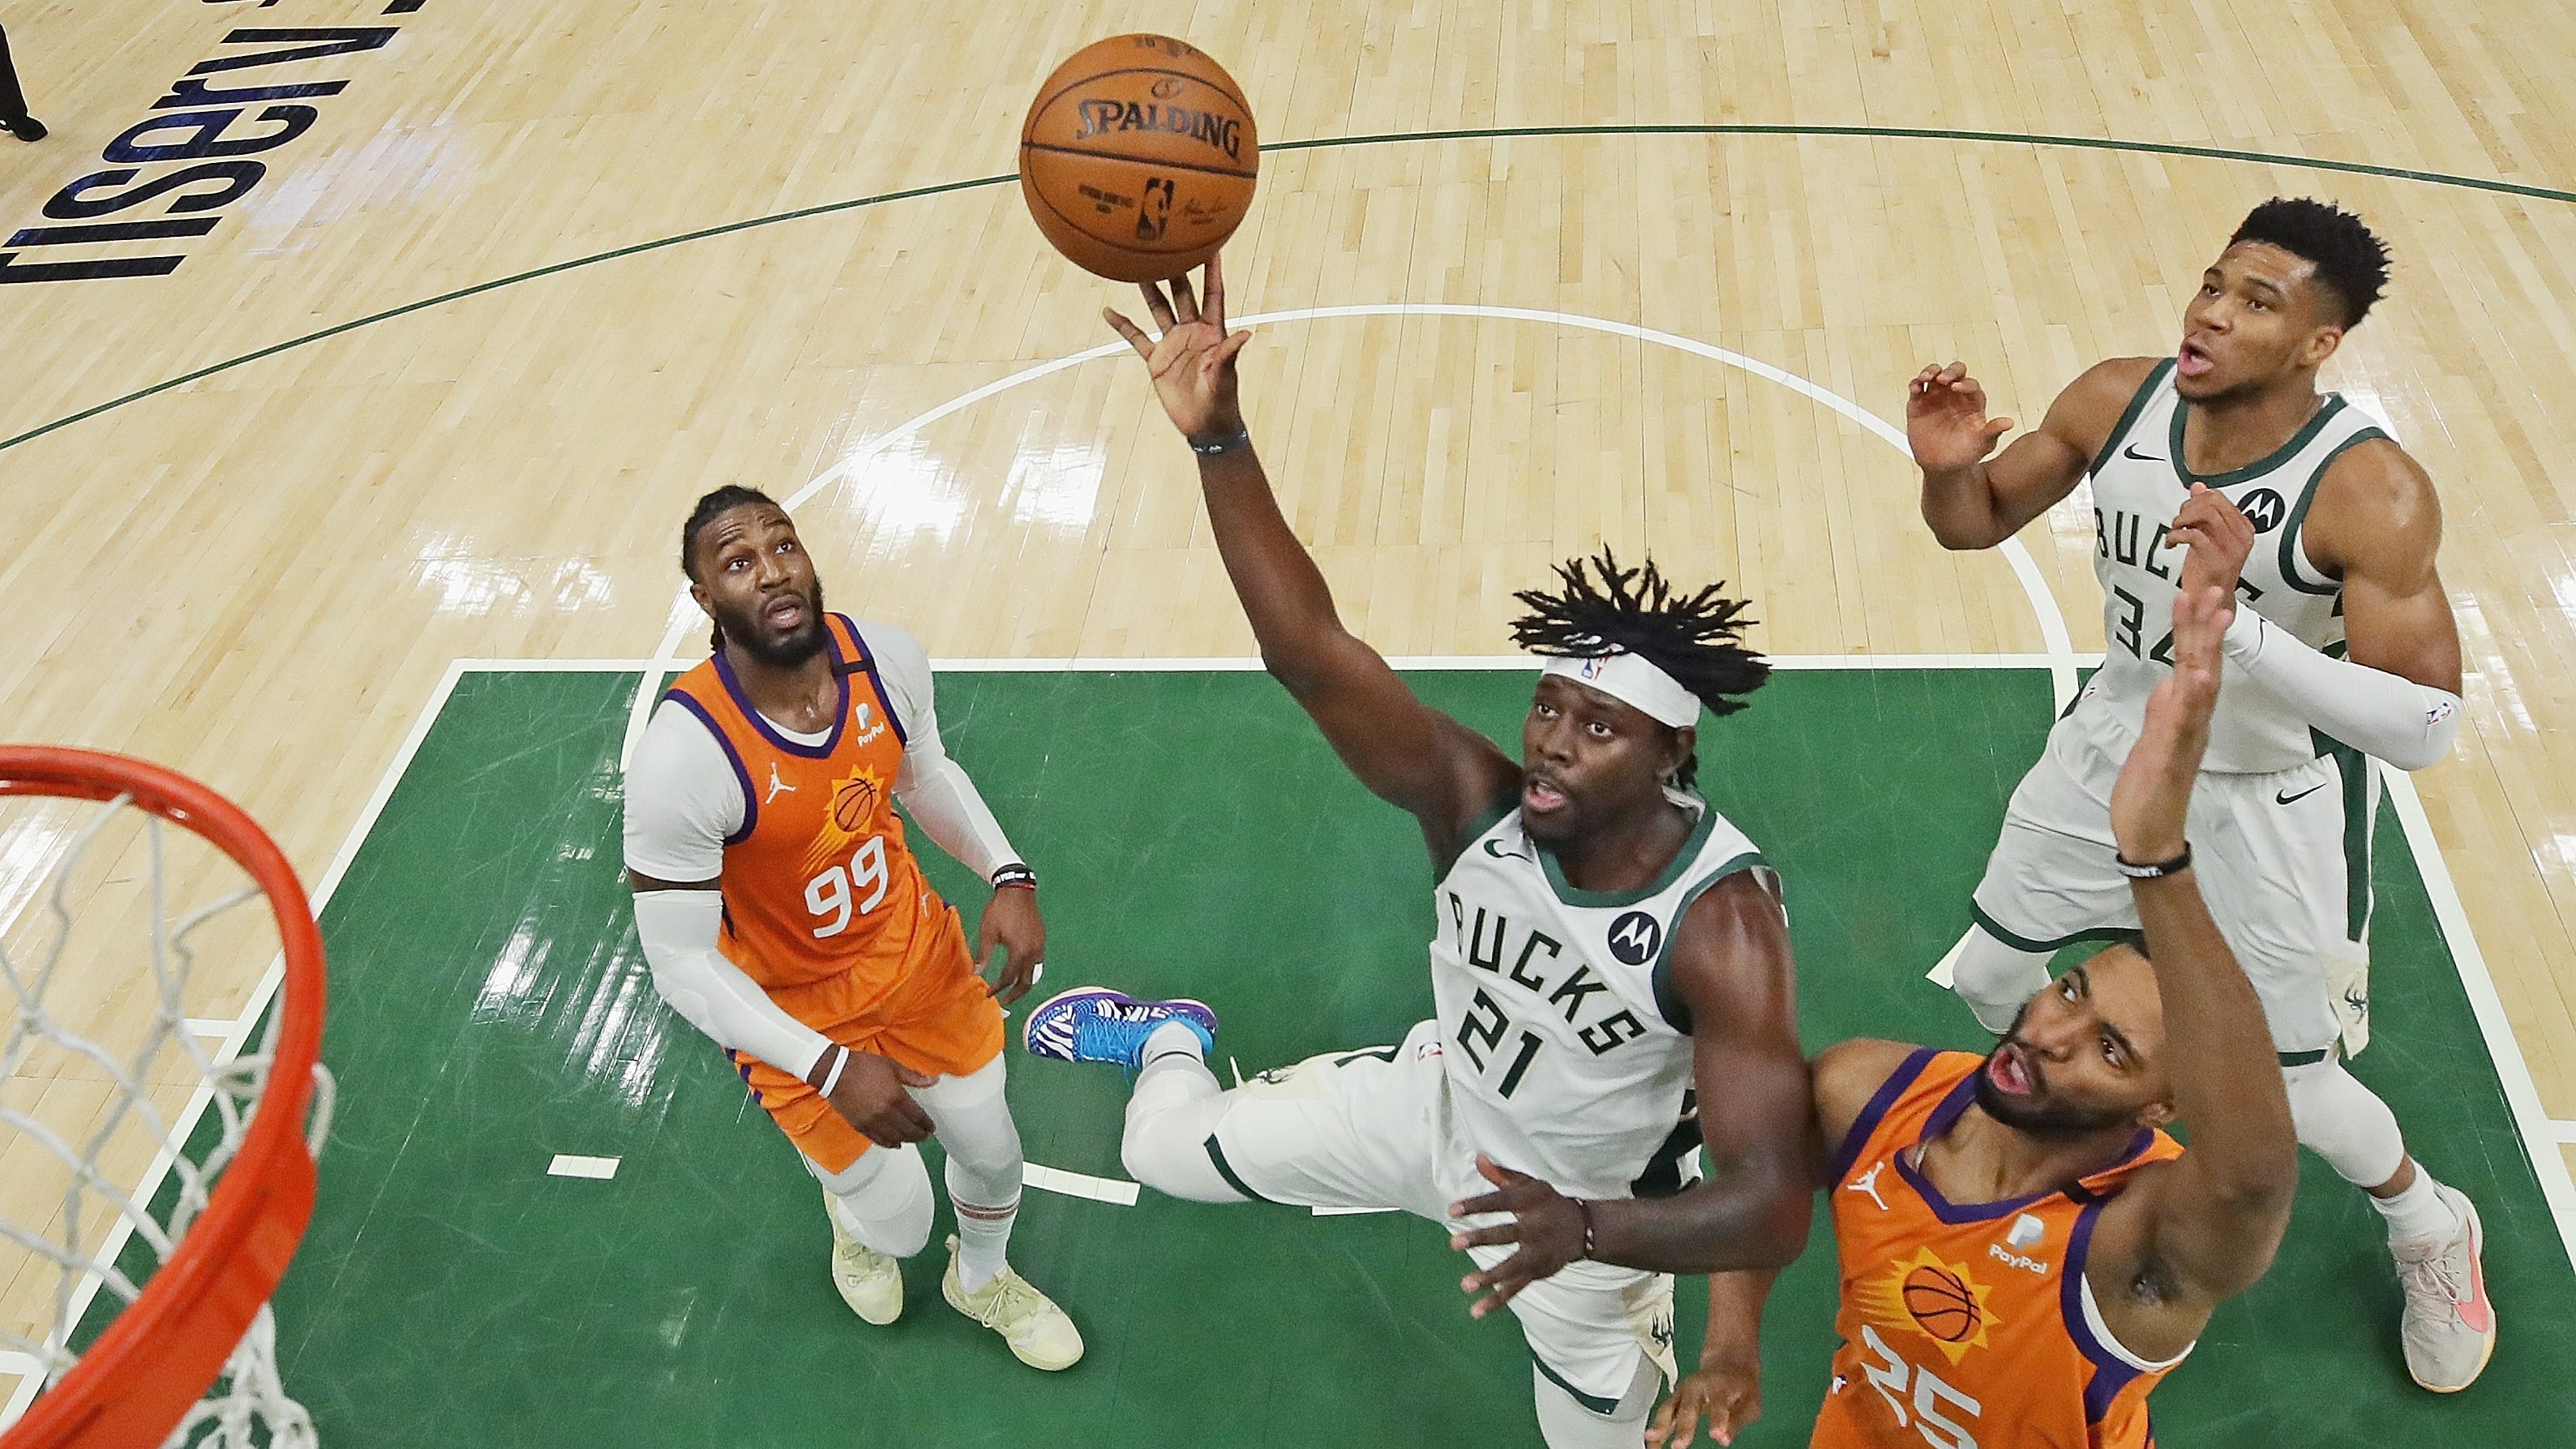 2021 NBA Finals: Suns vs. Bucks